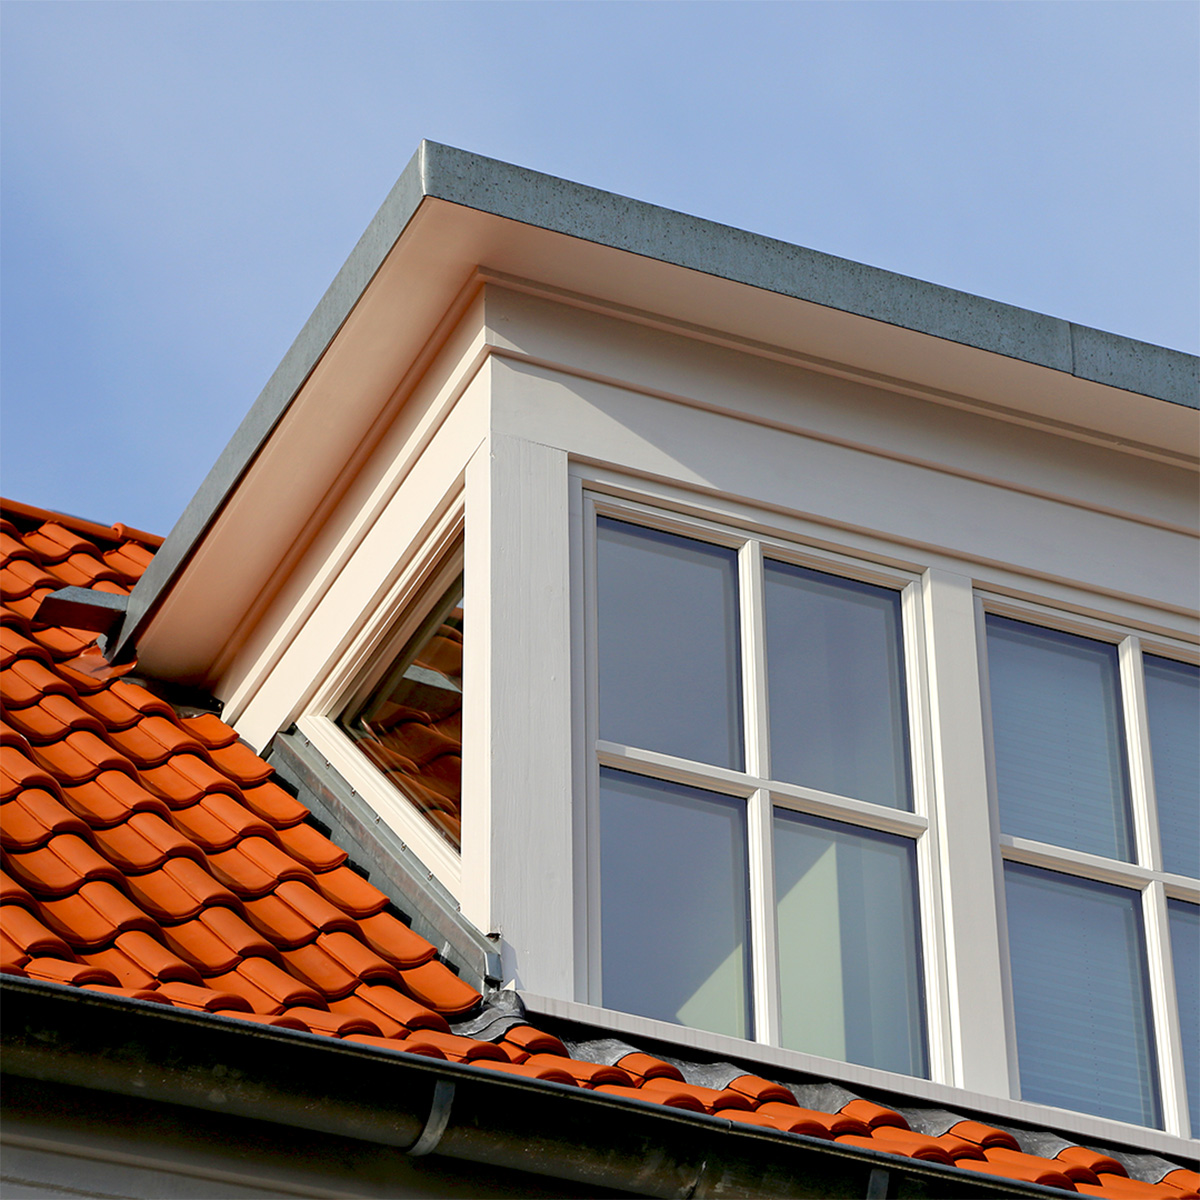 Dormer flat roof installers Bucks